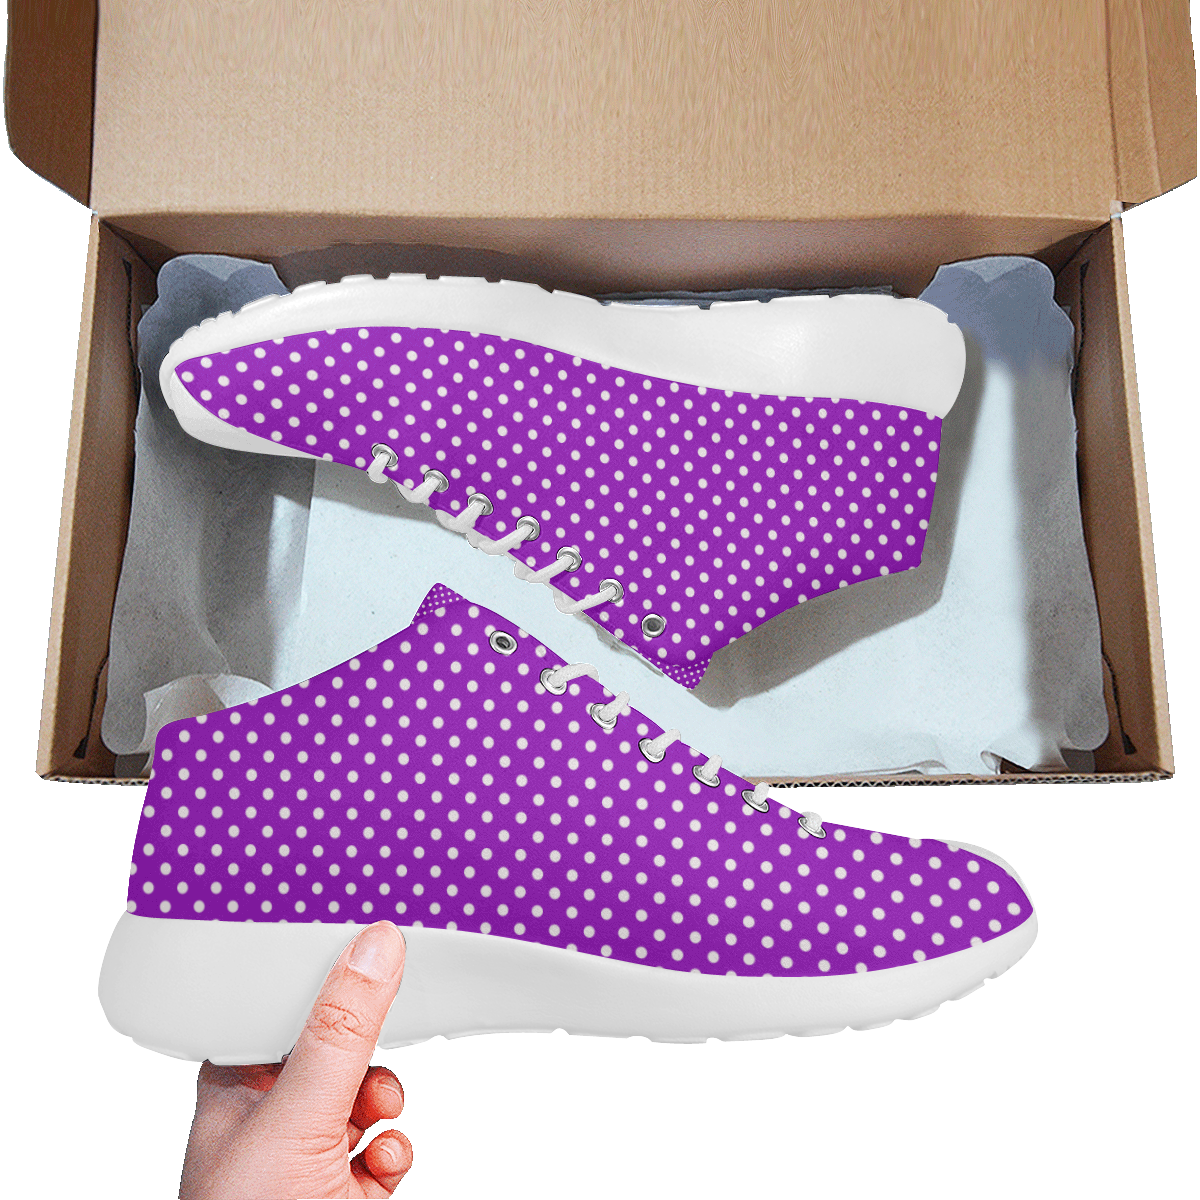 Lavander polka dots Women's Basketball Training Shoes/Large Size (Model 47502)